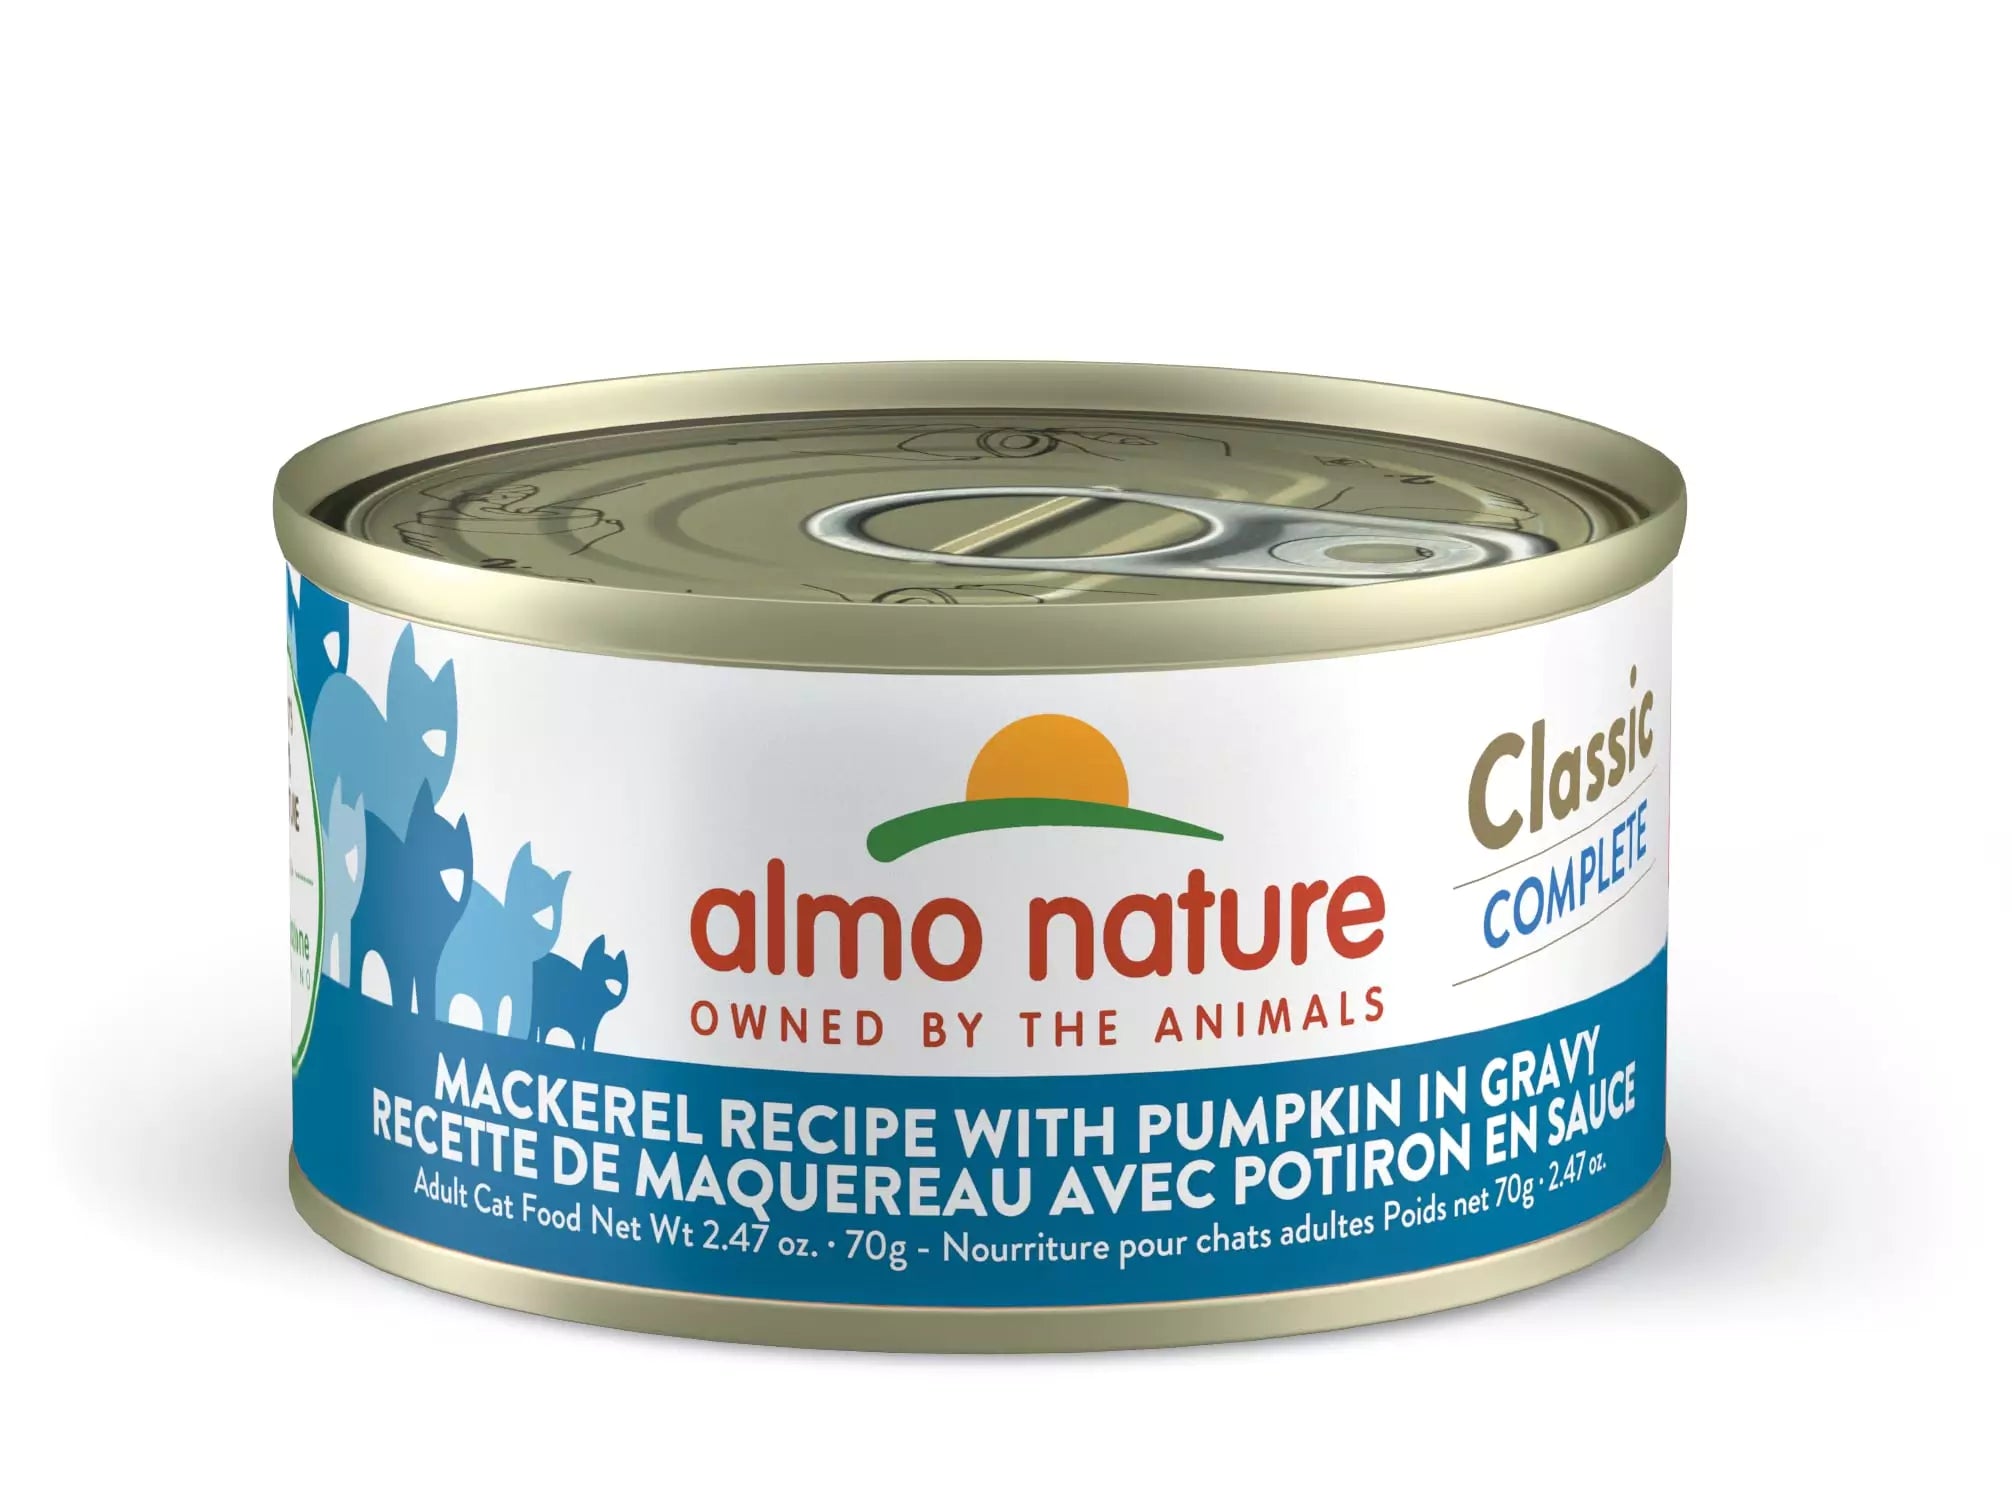 Almo Nature - Classic Complete - Mackerel With Pumpkin In Gravy (Wet Cat Food)